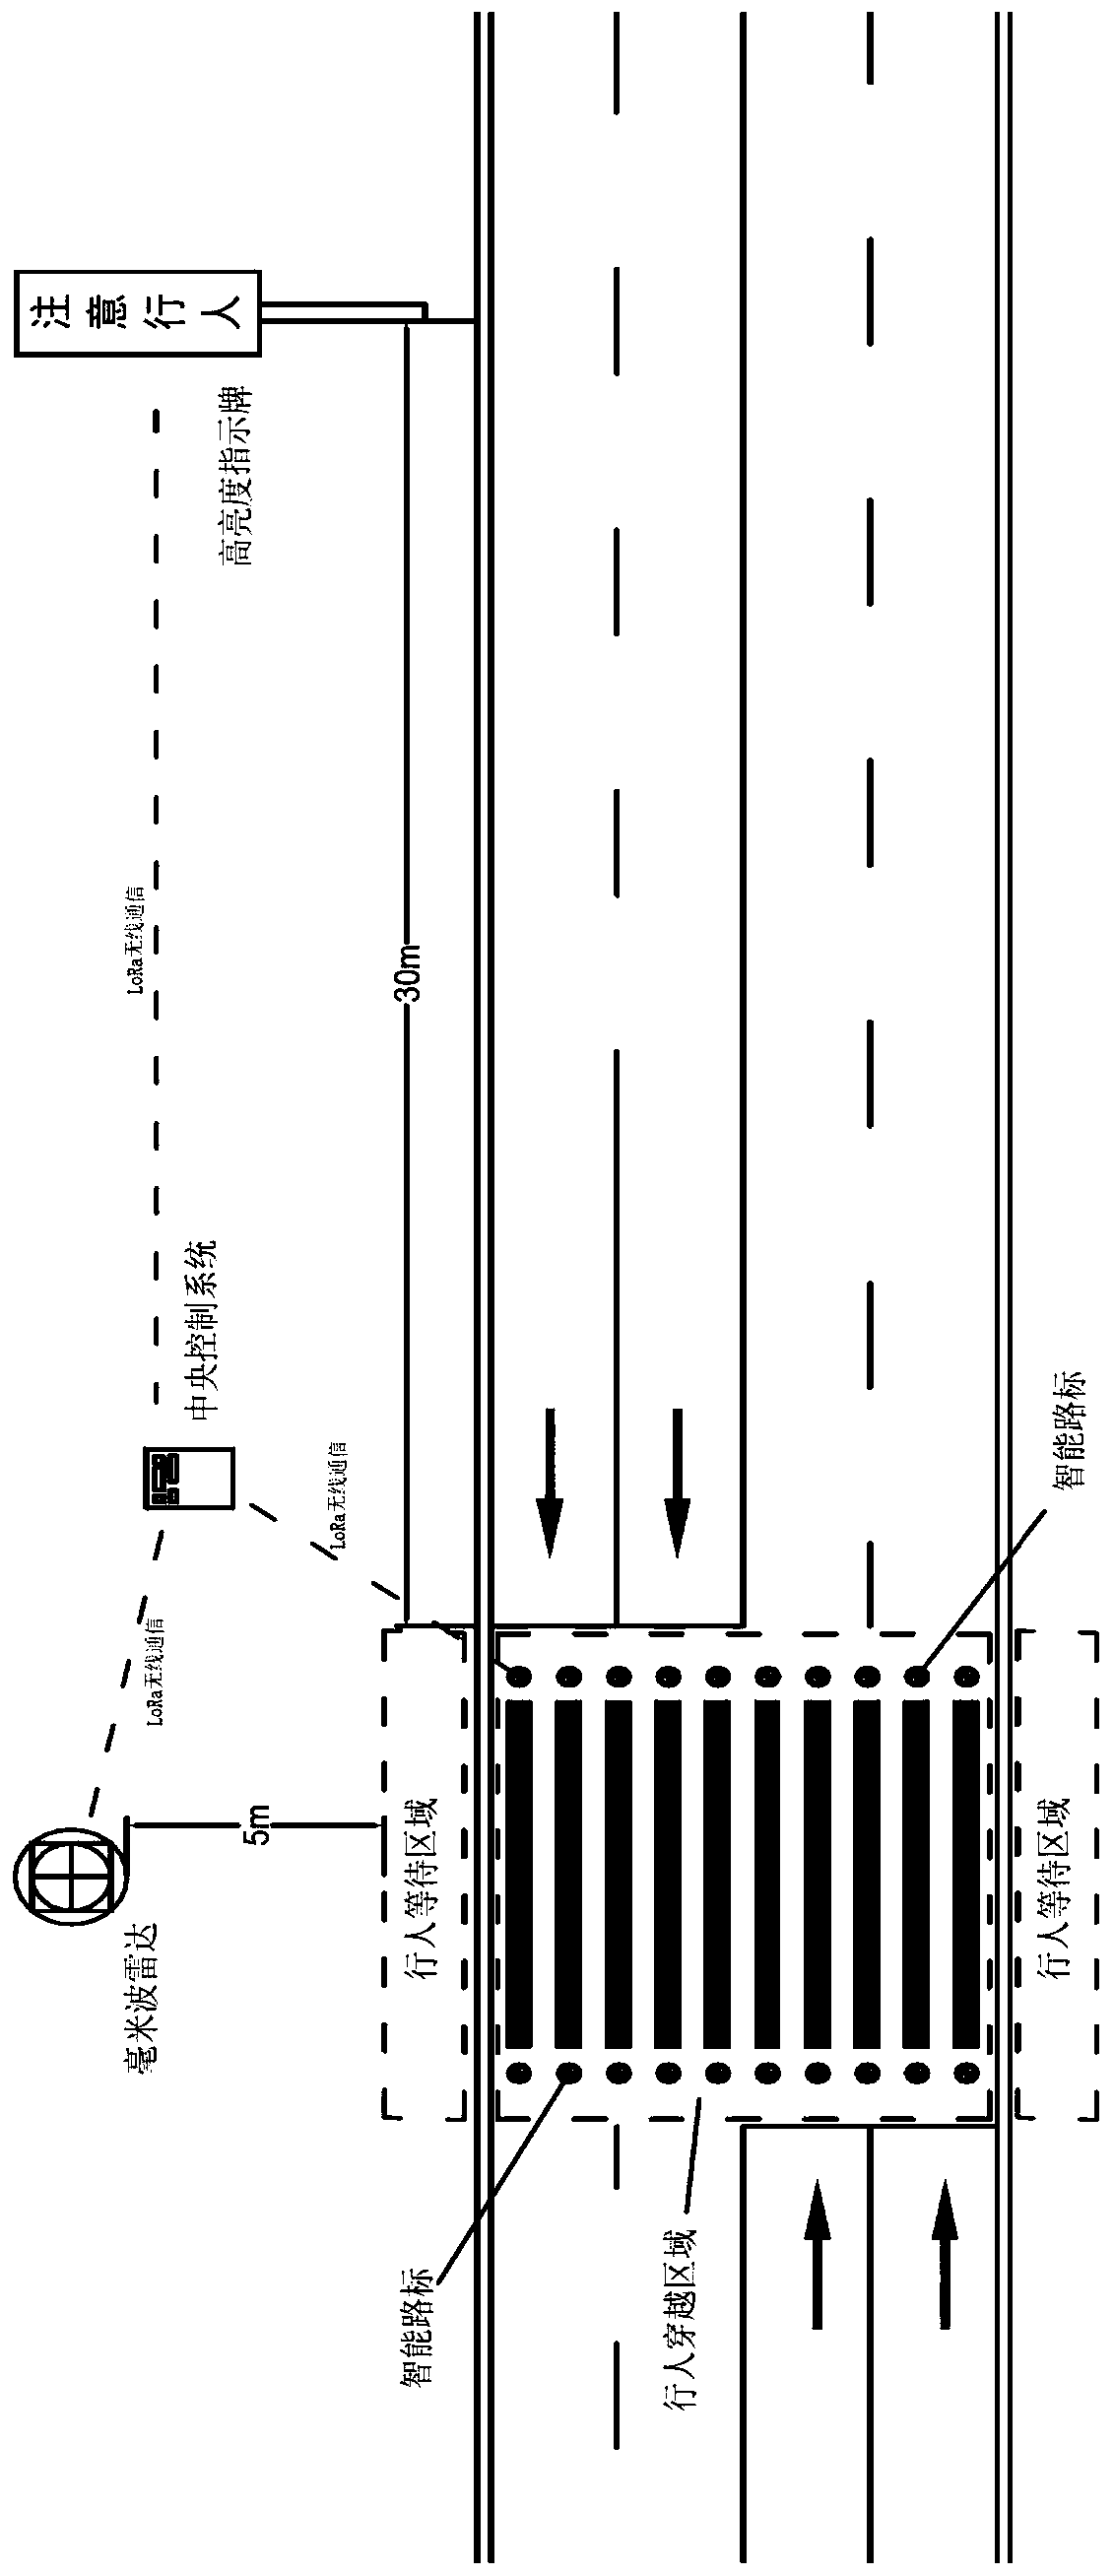 Pedestrian crosswalk prewarning implementation method and prewarning system